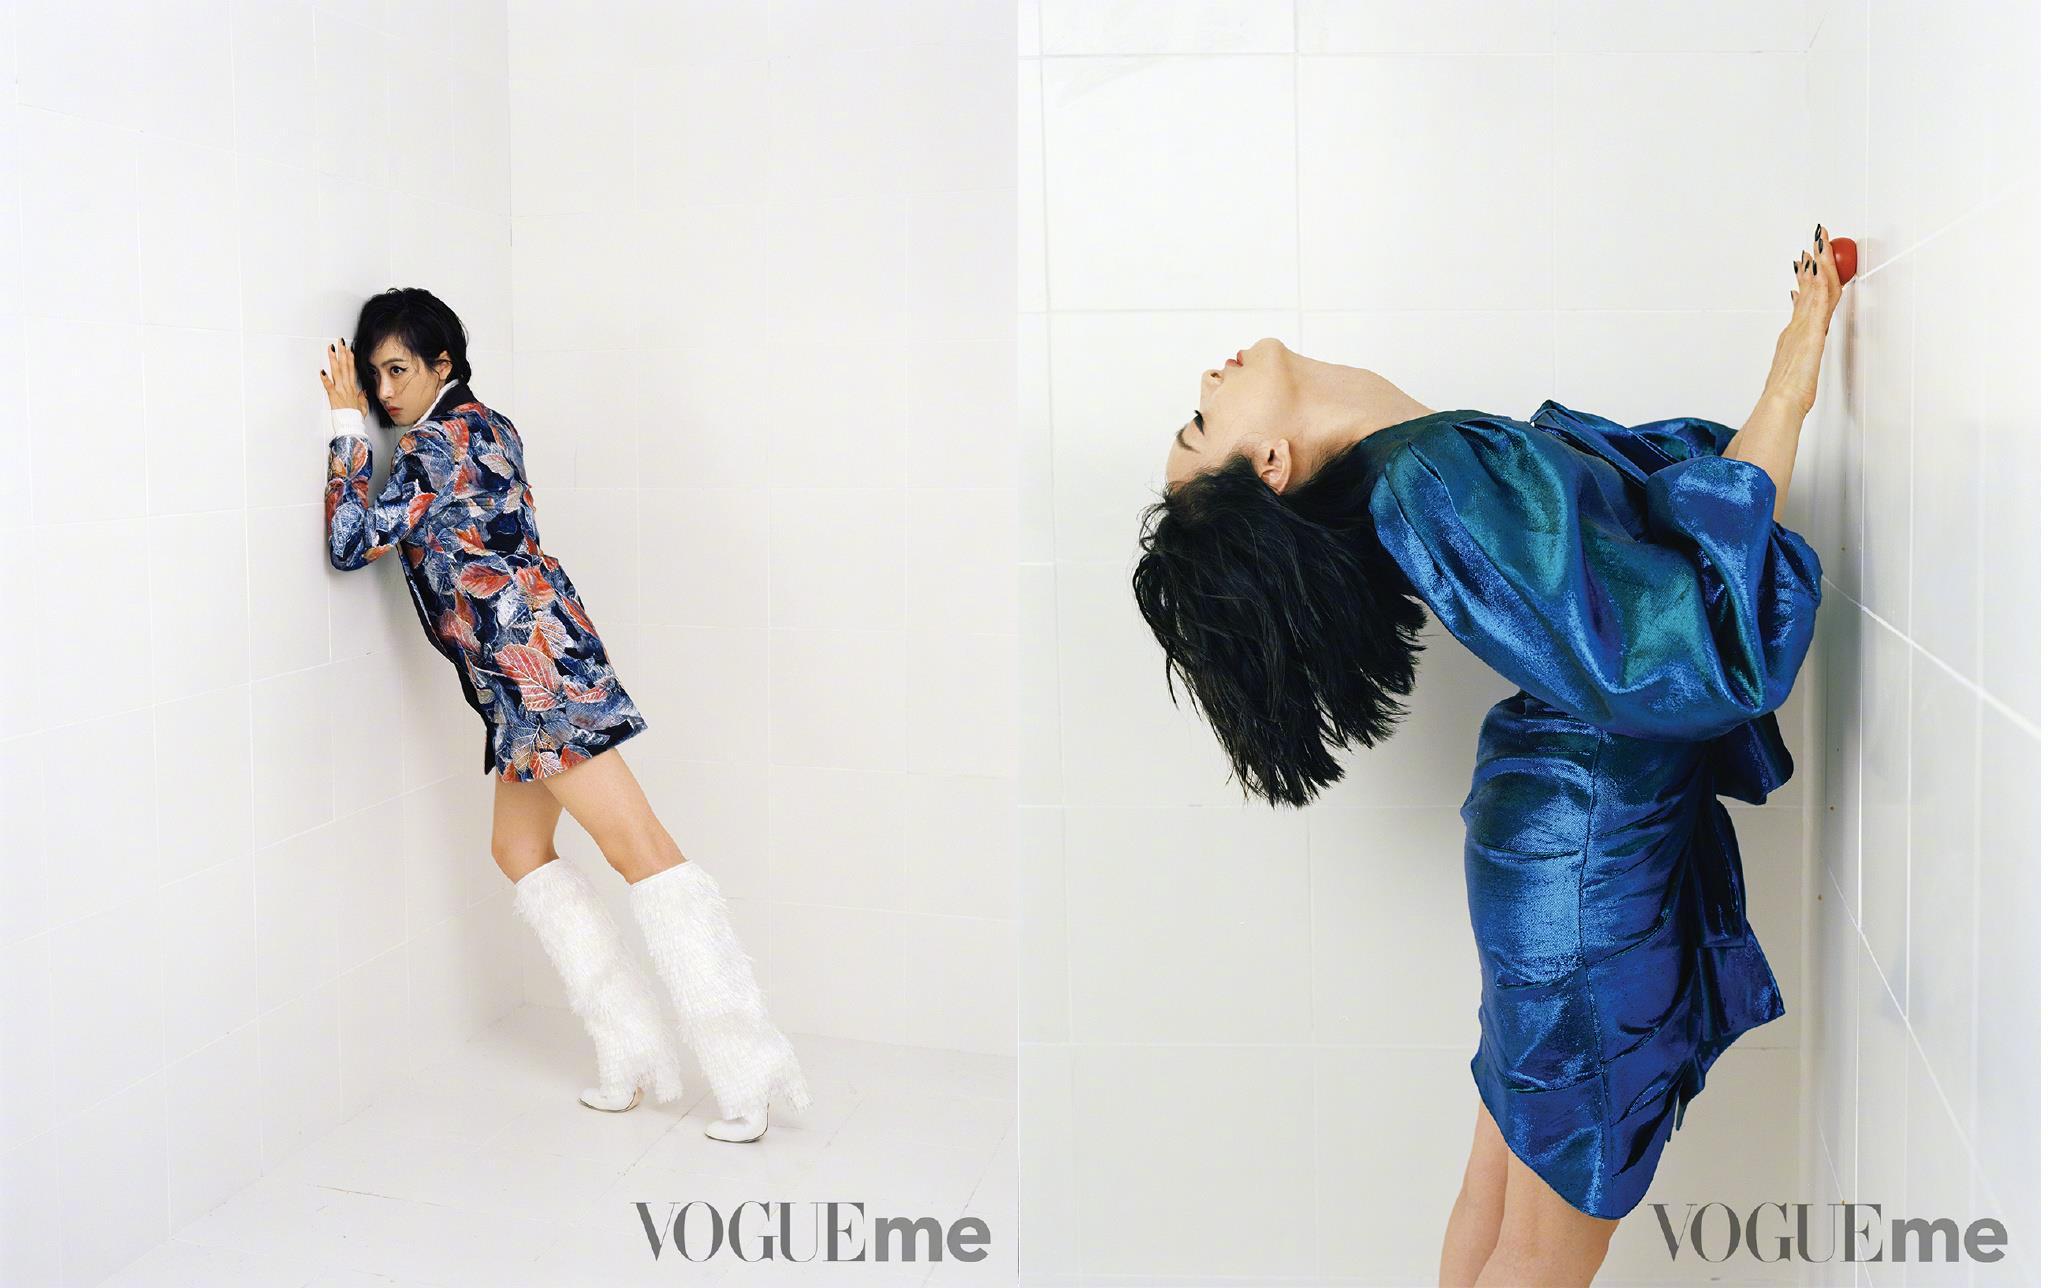 VogueMe 八月号, 封面主题 宋茜 “解锁新姿” 时尚摩登女郎的画风,